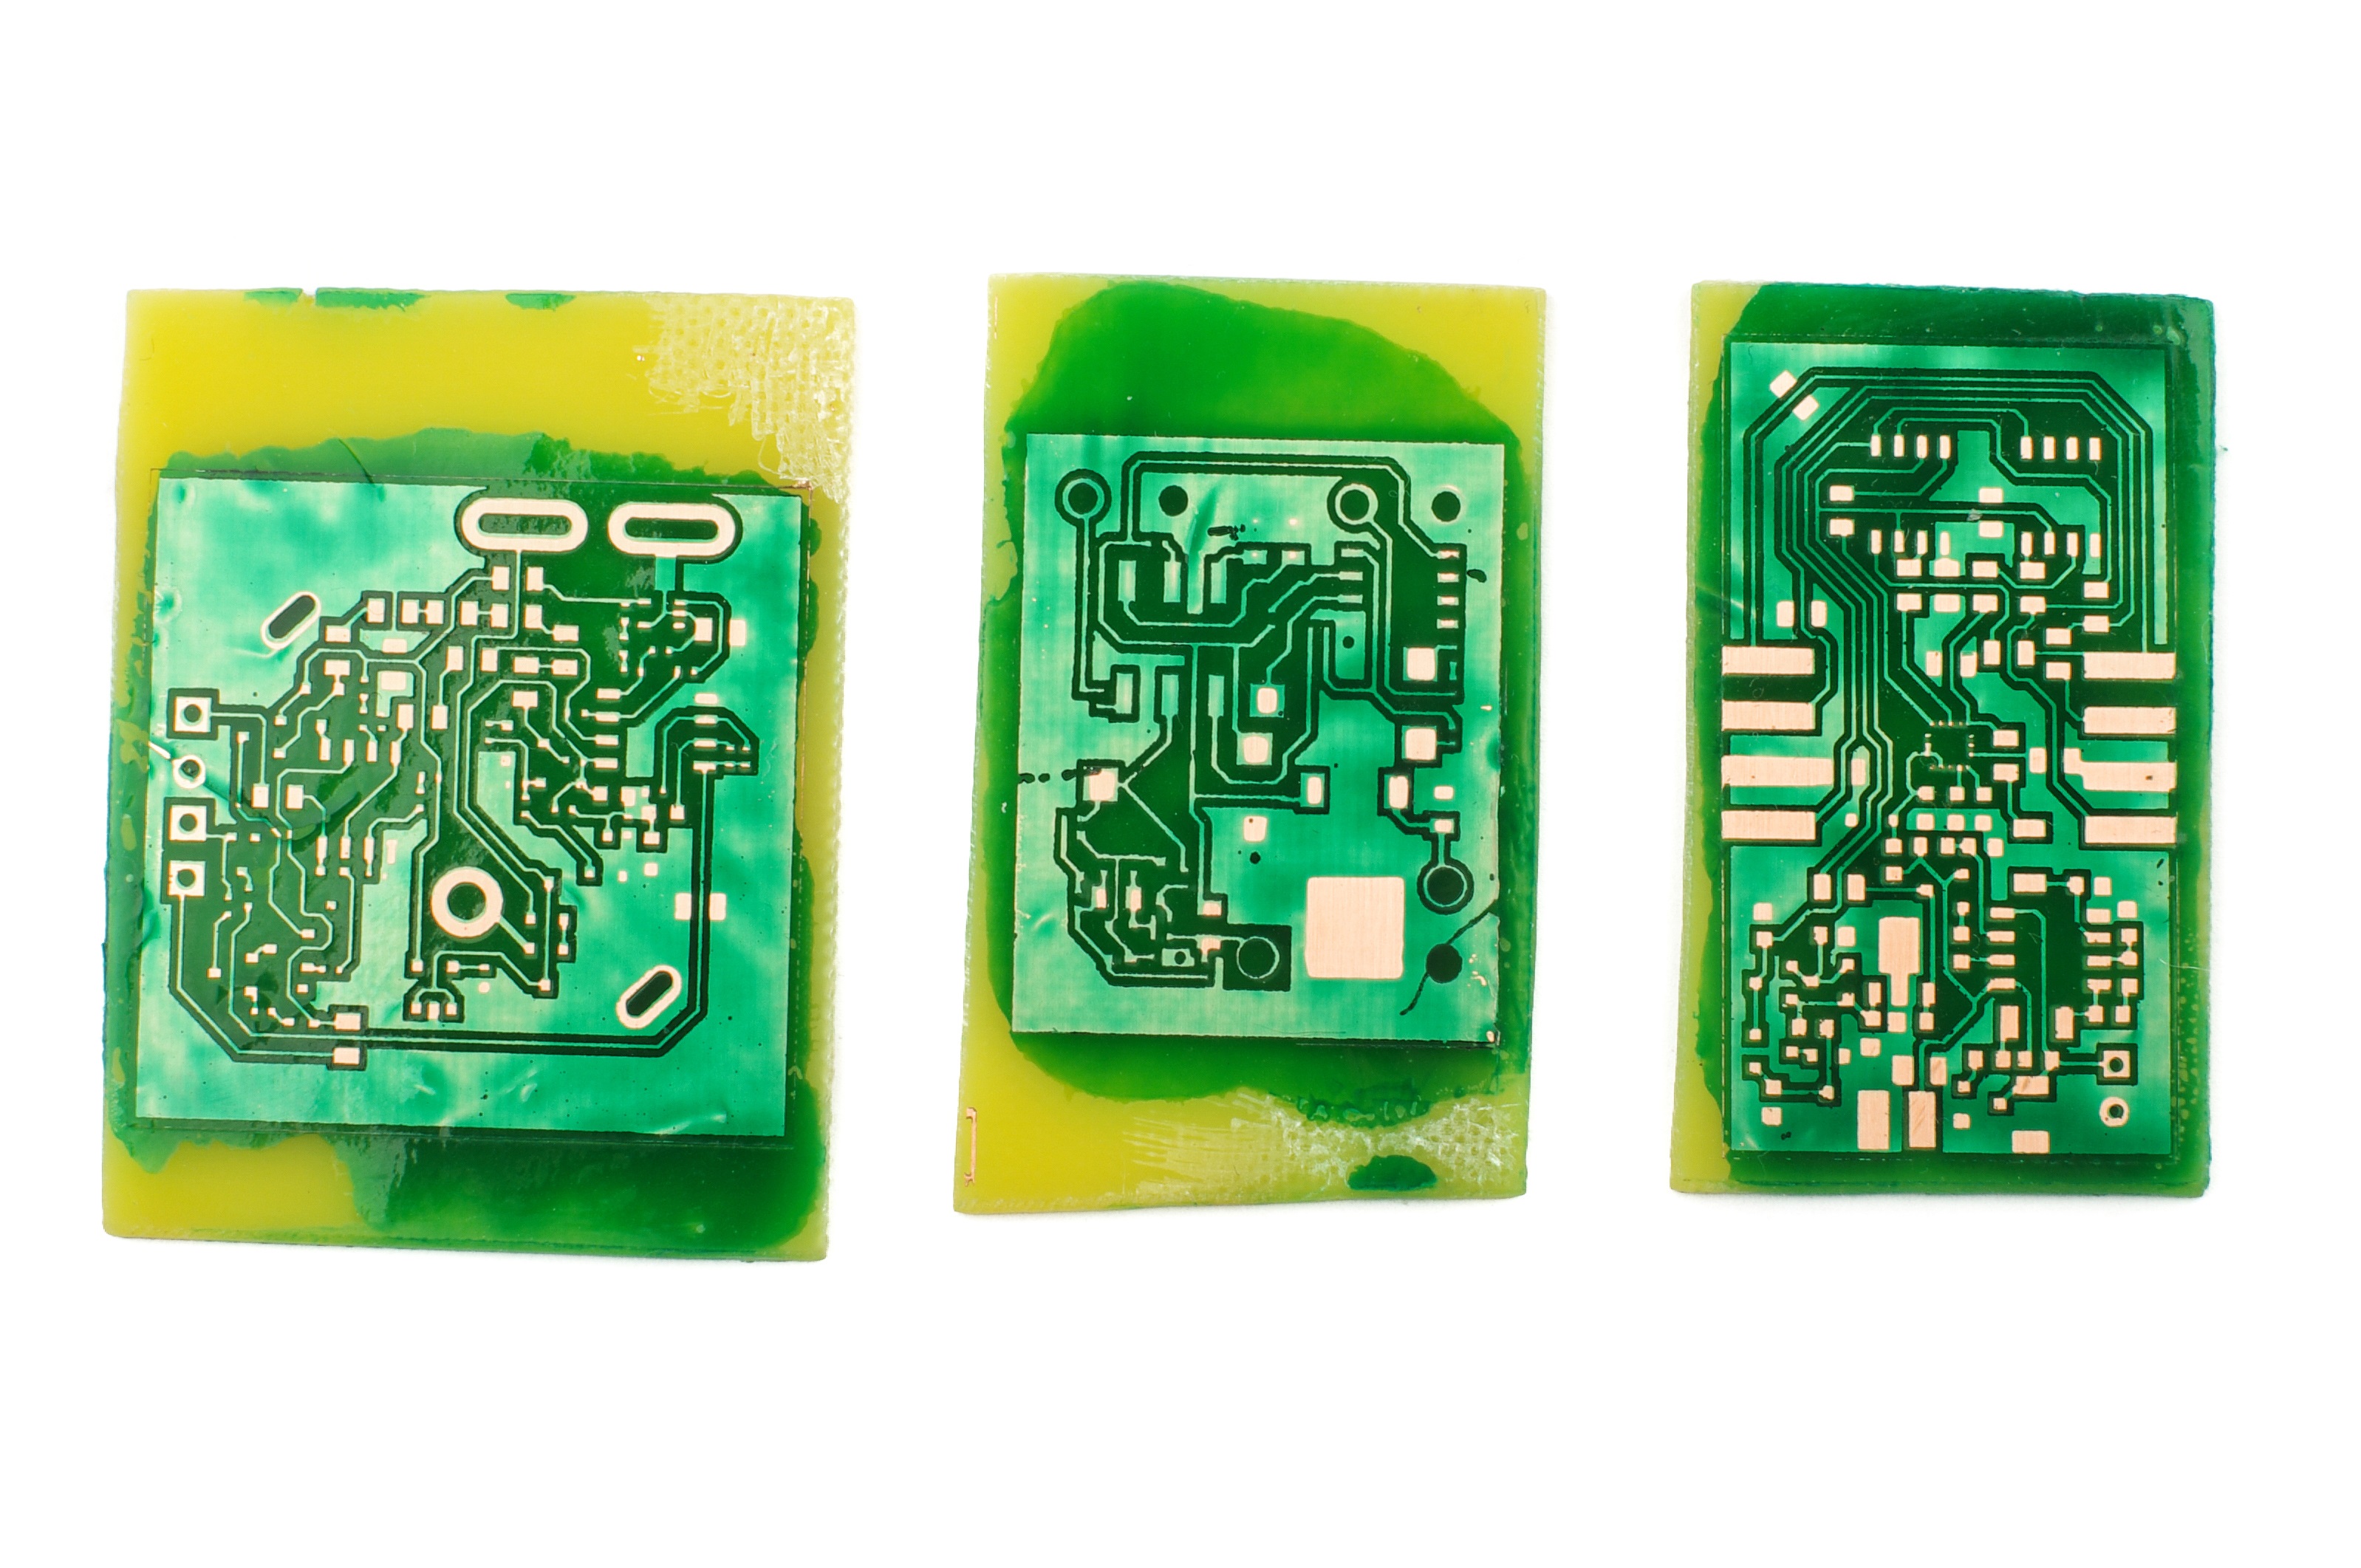 PCB prototypes produced in agile hardware development